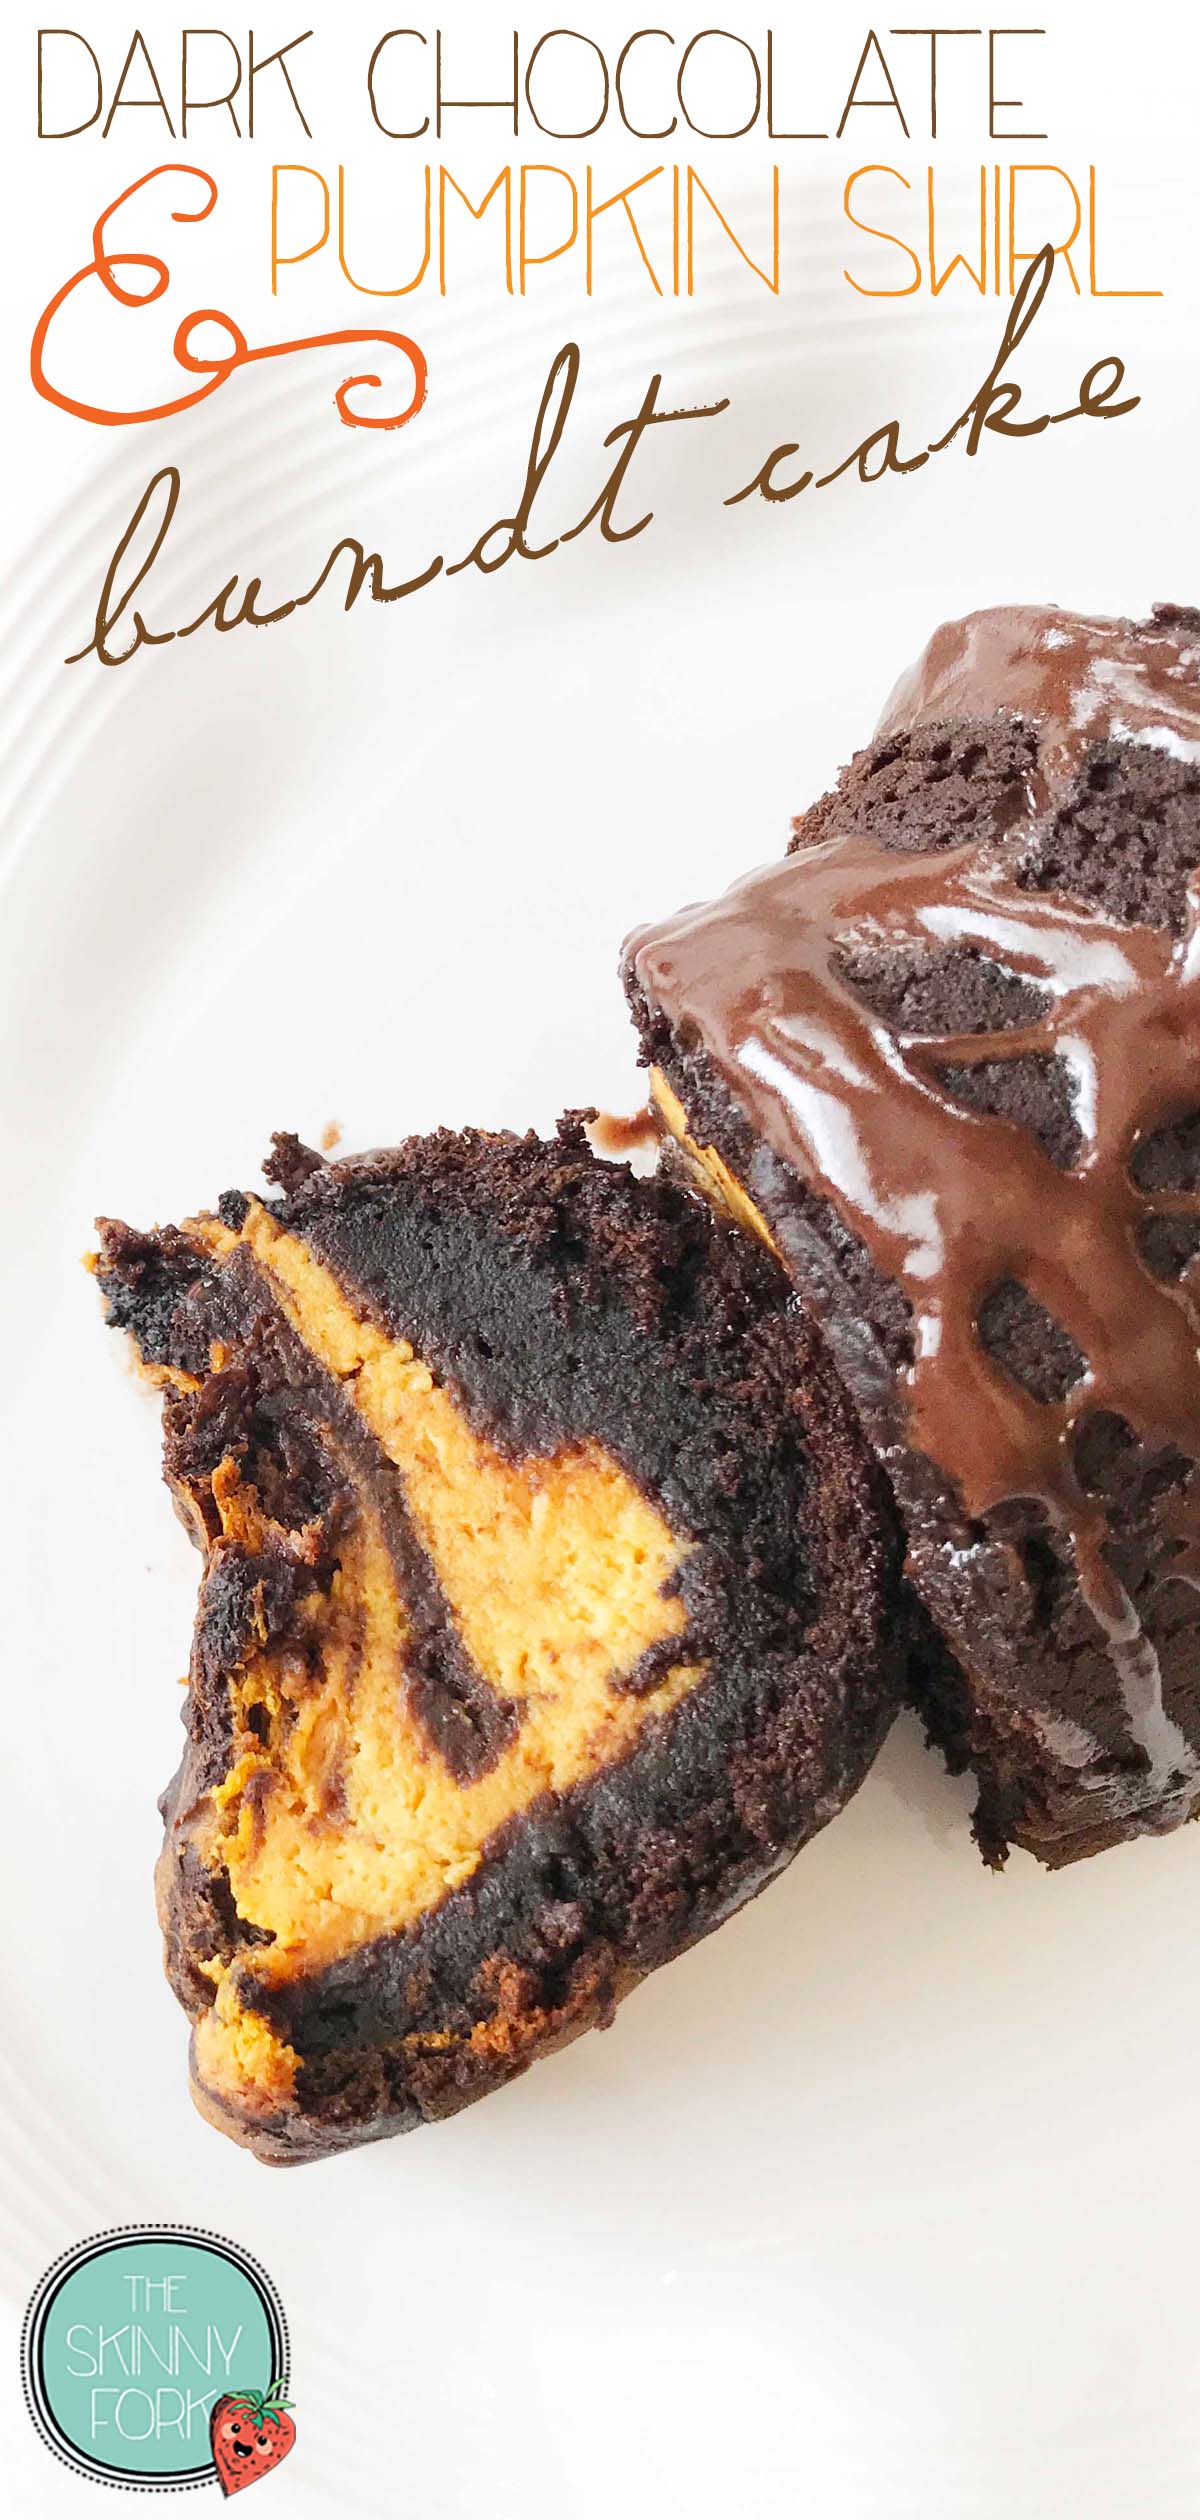 Dark Chocolate & Pumpkin Swirl Bundt Cake